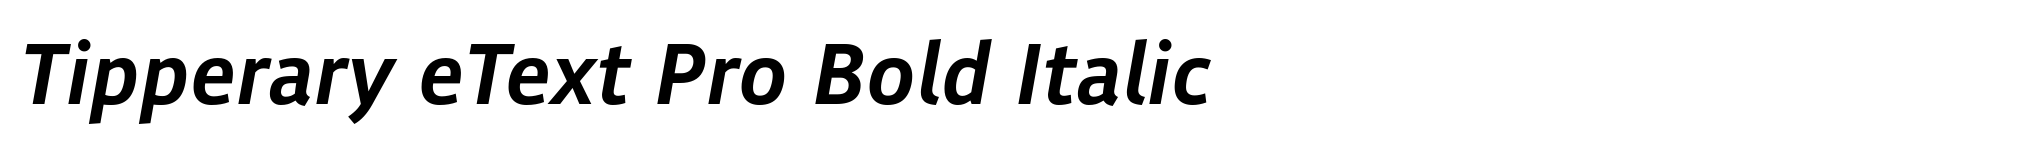 Tipperary eText Pro Bold Italic image